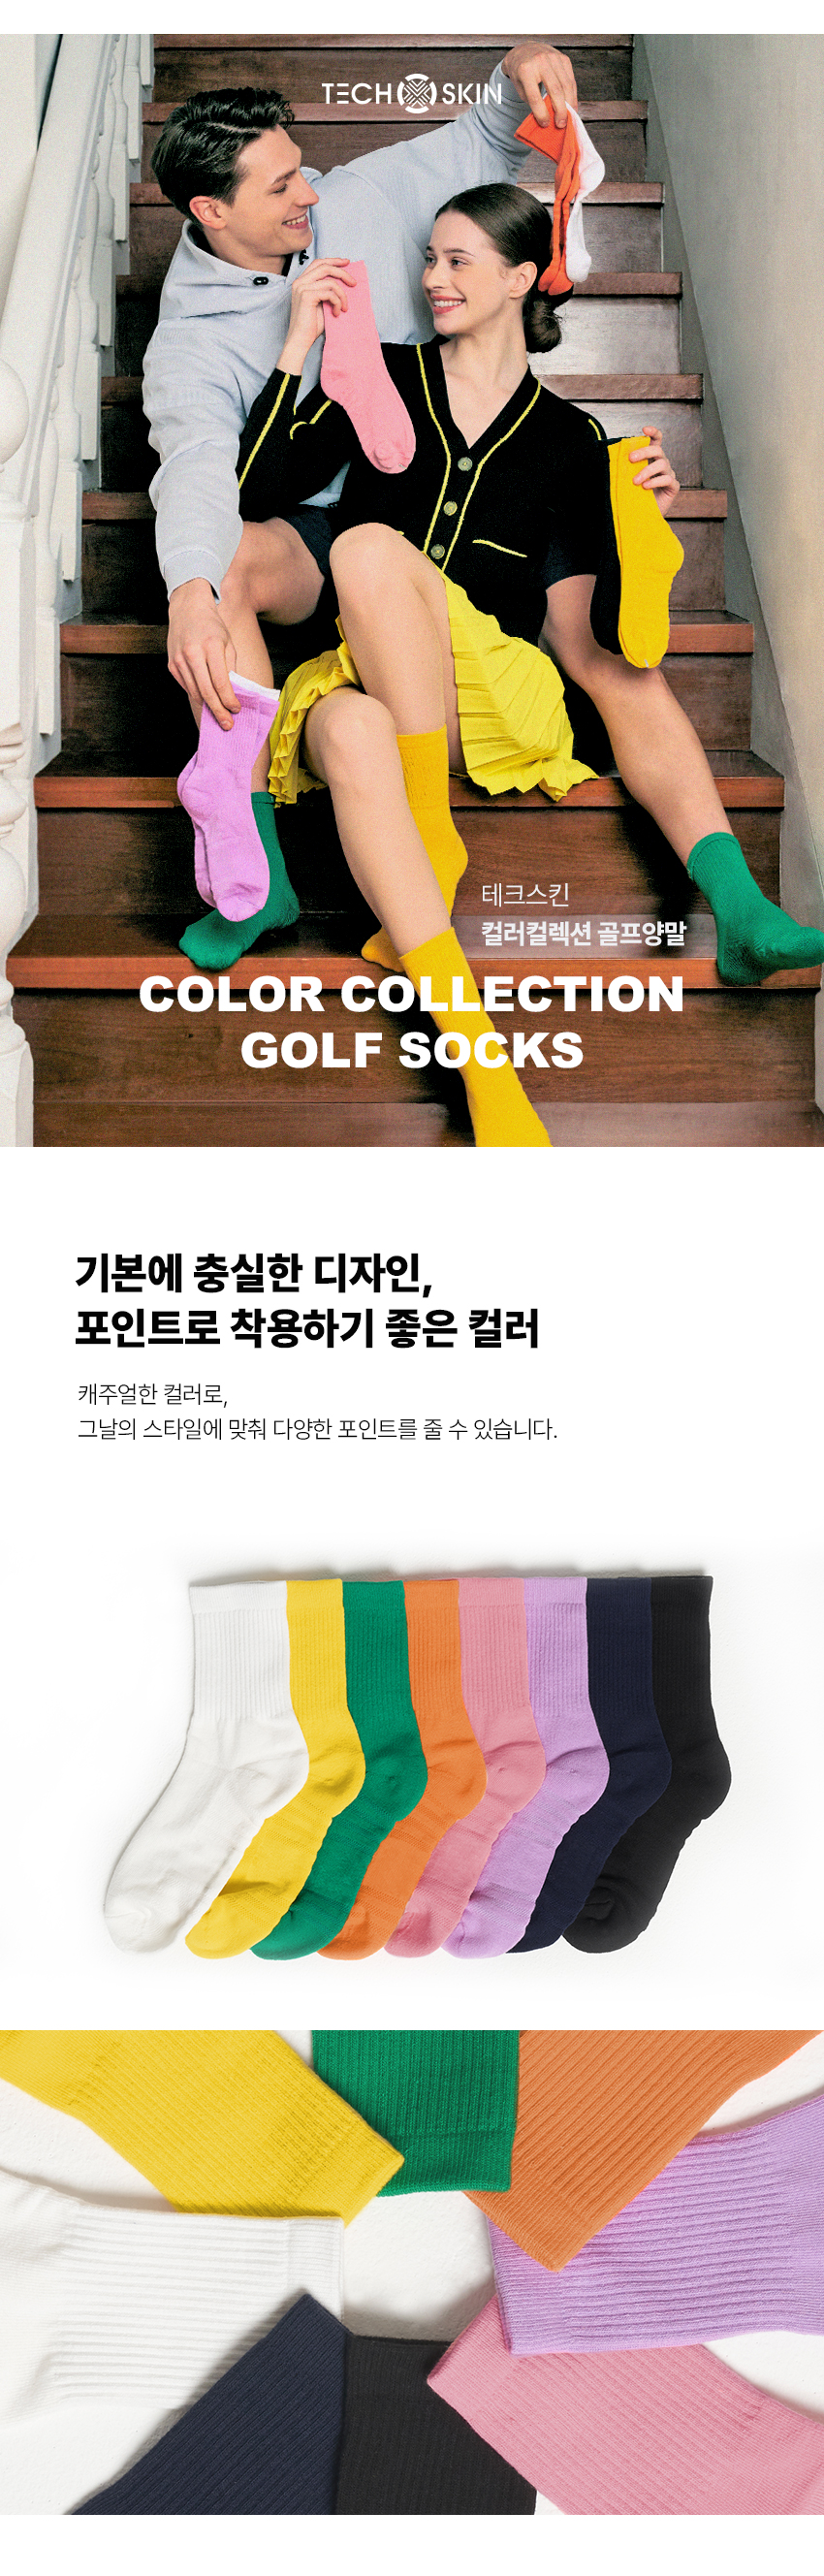 techskin_color_collection_socks_04.jpg